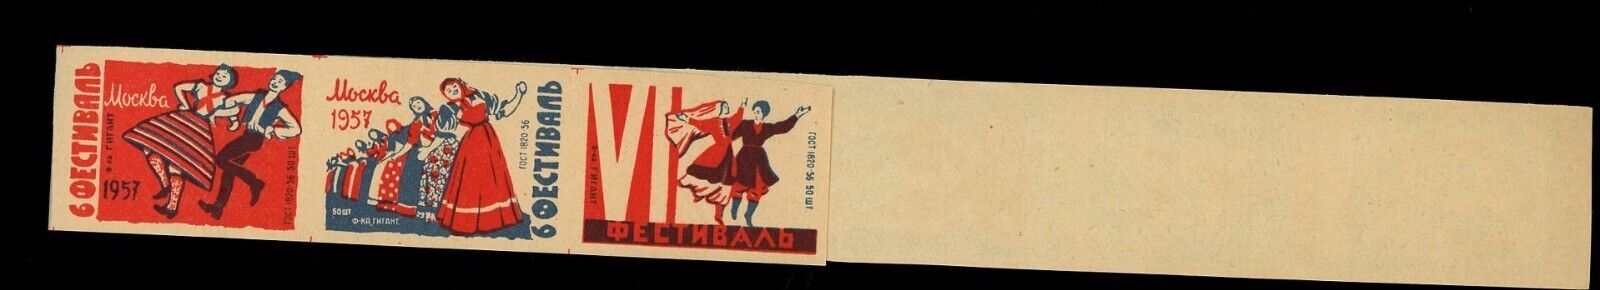 1957 Uncut Sheet of 9 Russian Dancing Theme Match Book Labels (9) Без бренда - фотография #4